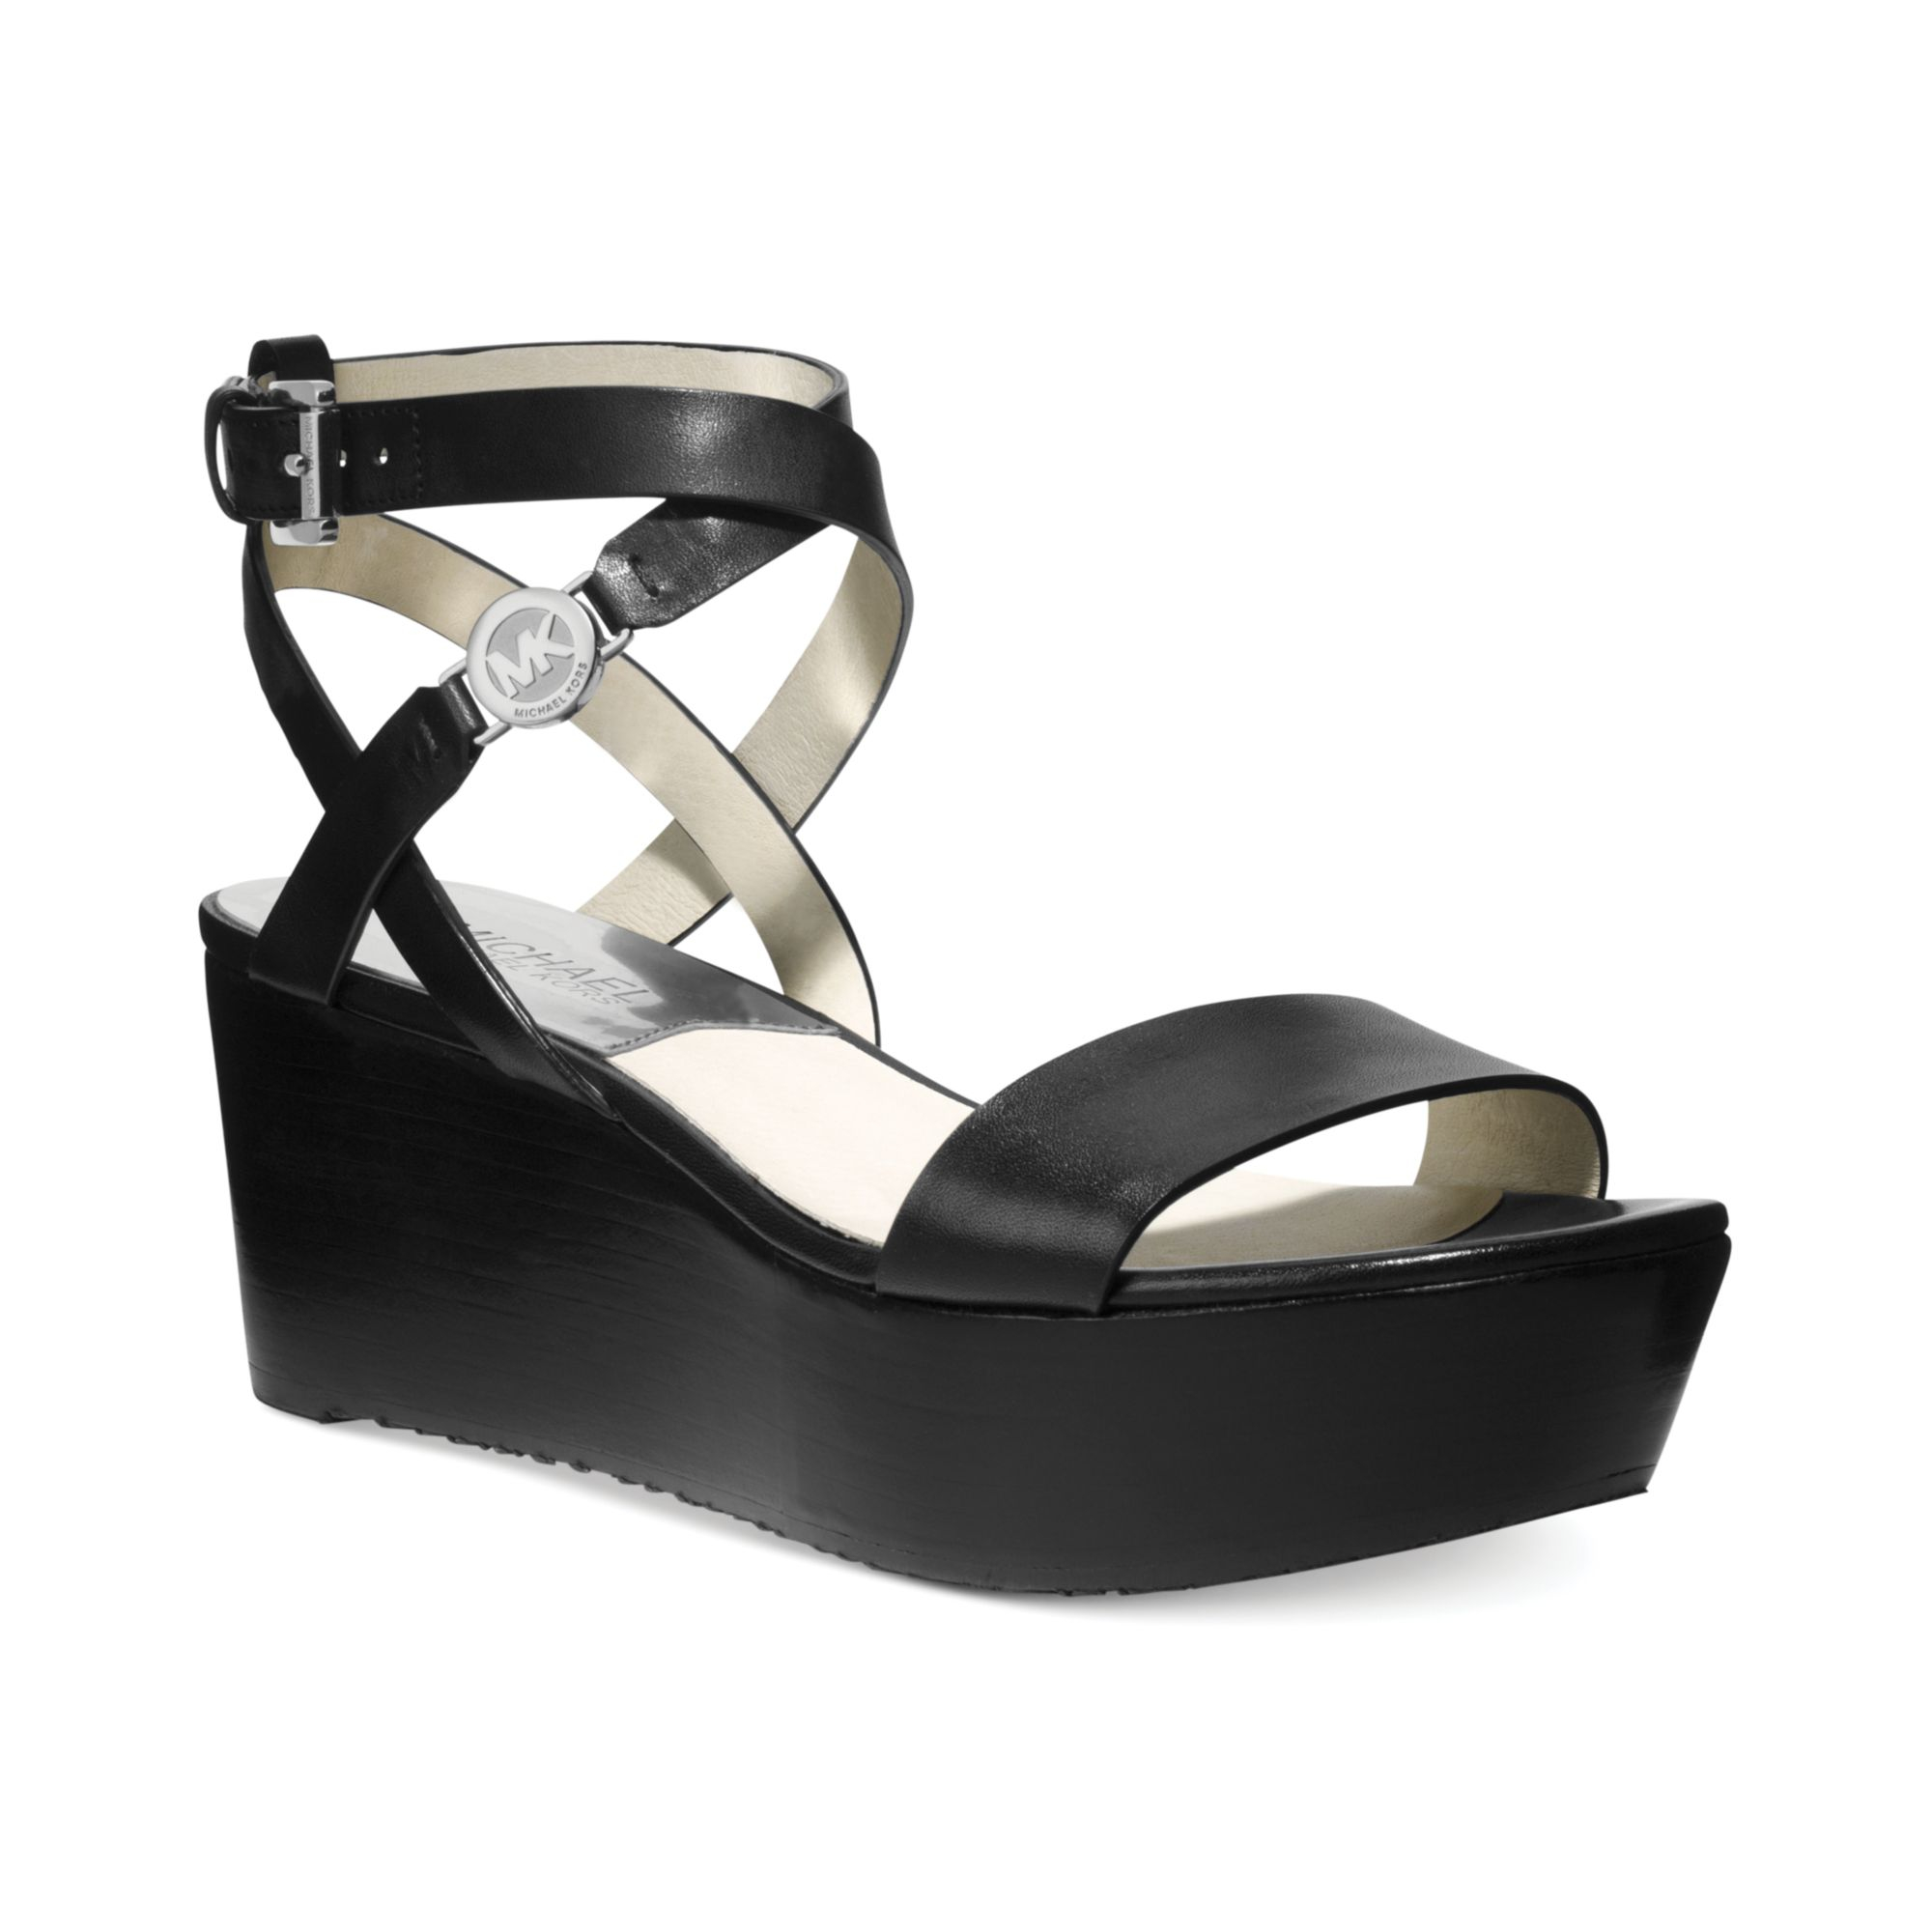 Lyst - Michael Kors Michael Jalita Charm Platform Wedge Sandals in Black